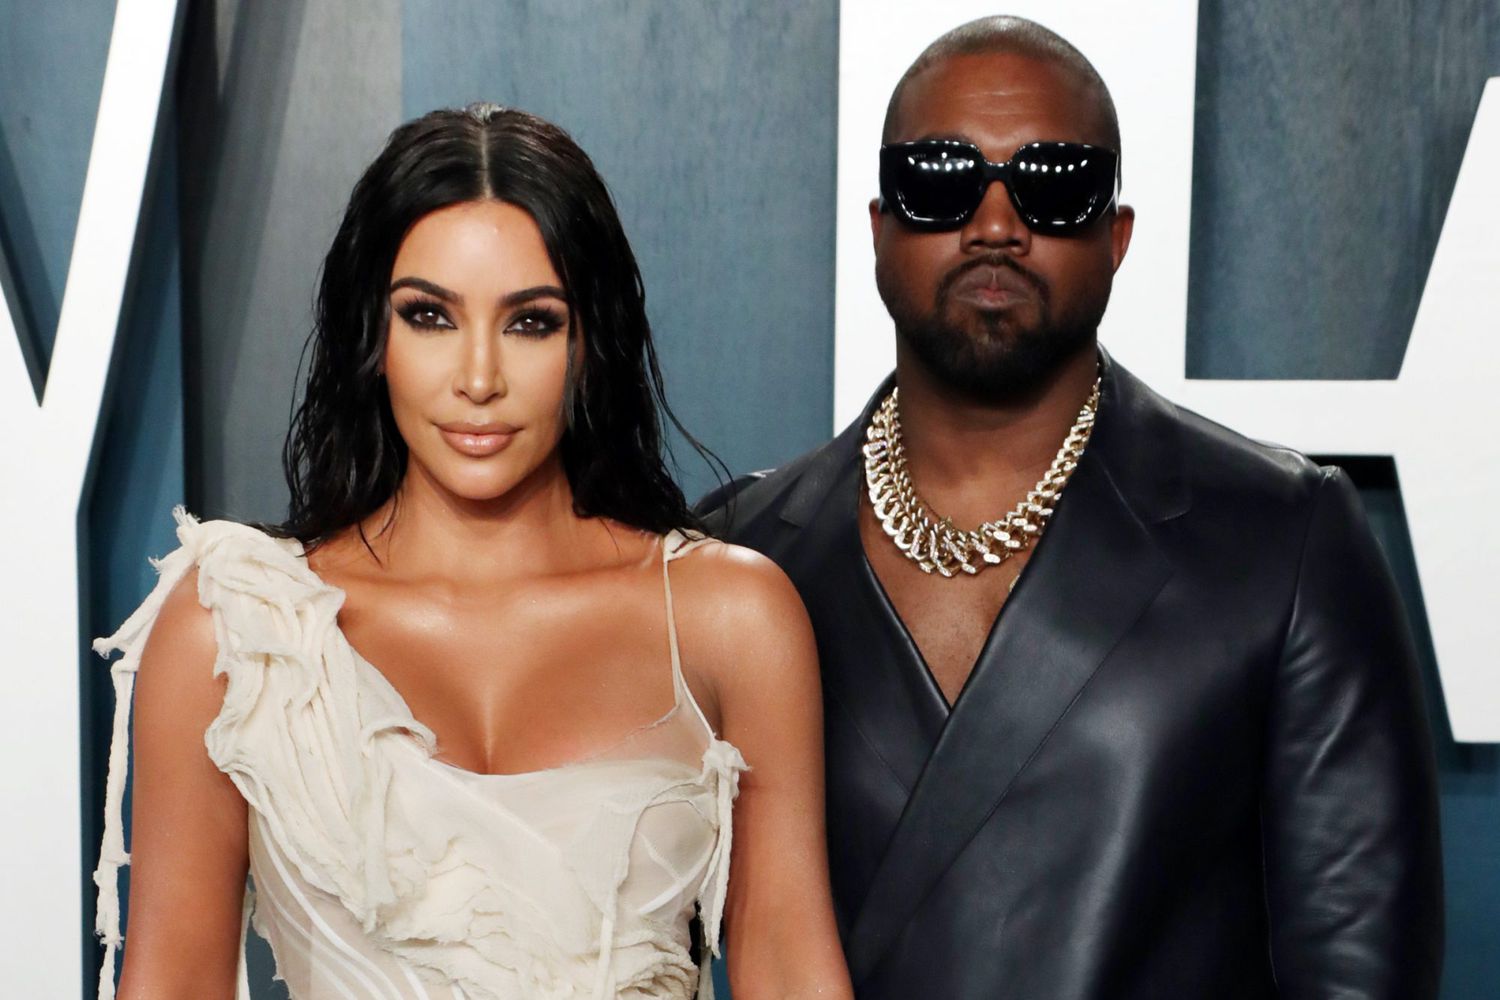 Kim Kardashian and Kanye West 'Doing Well' After Public Drama | PEOPLE.com